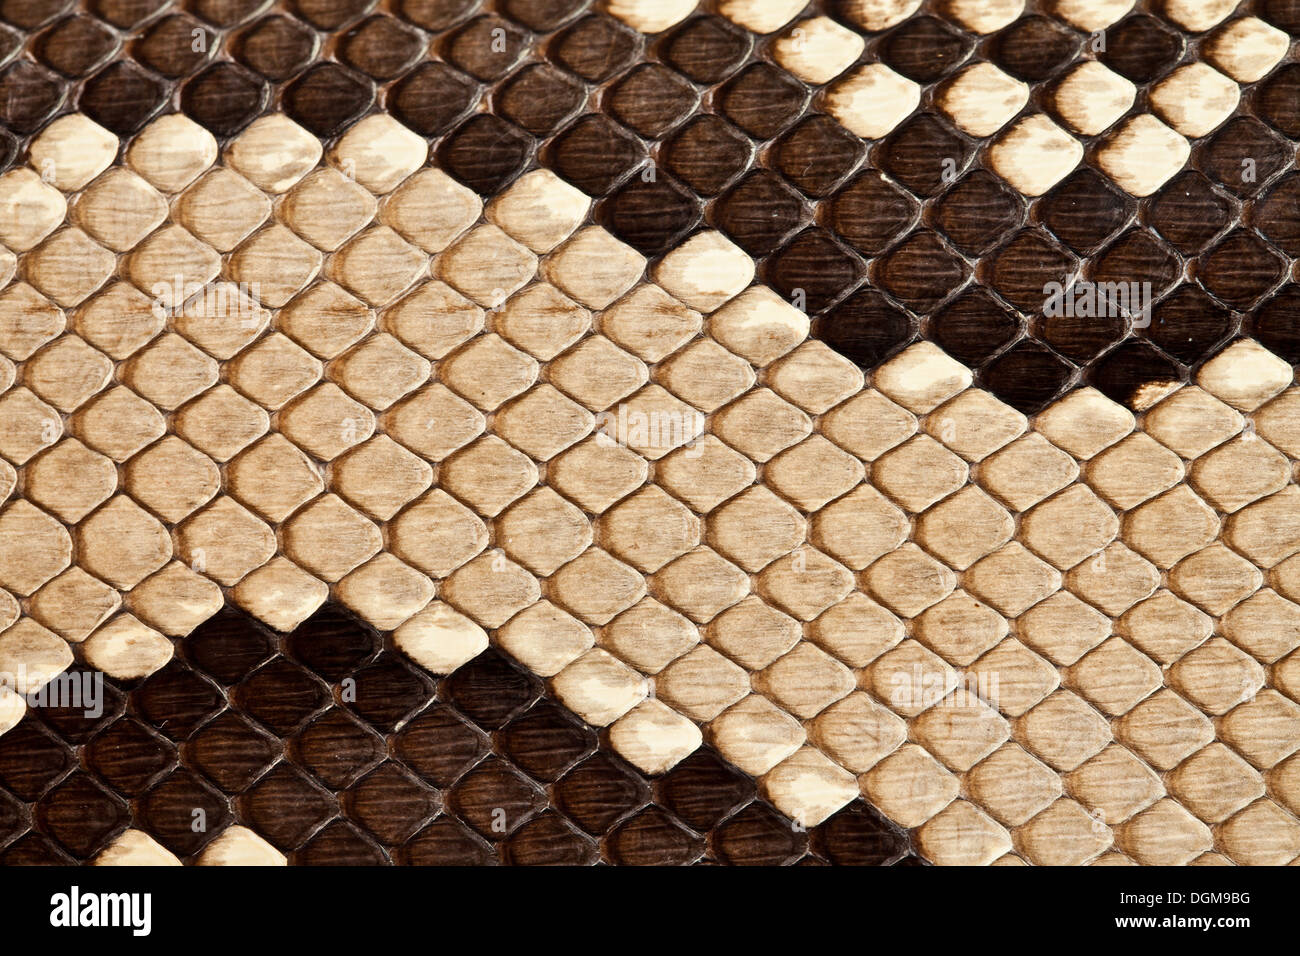 Background e texture di una pelle di serpente close up Foto Stock